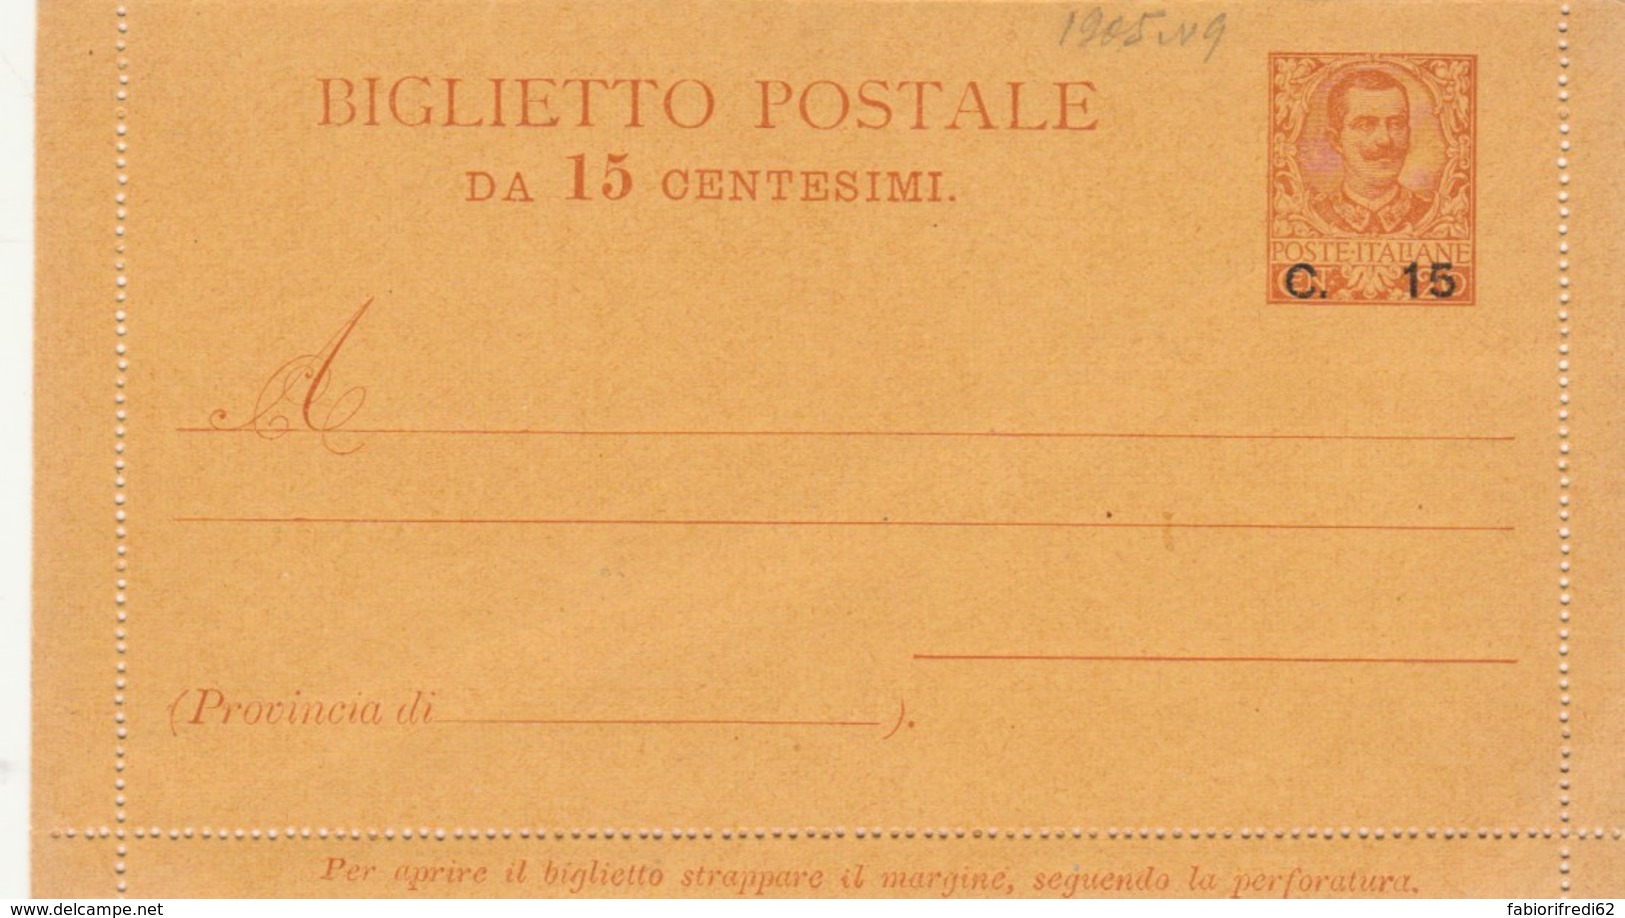 BIGLIETTO POSTALE C.15 SU 20 -1905 NUOVO (IX501 - Interi Postali